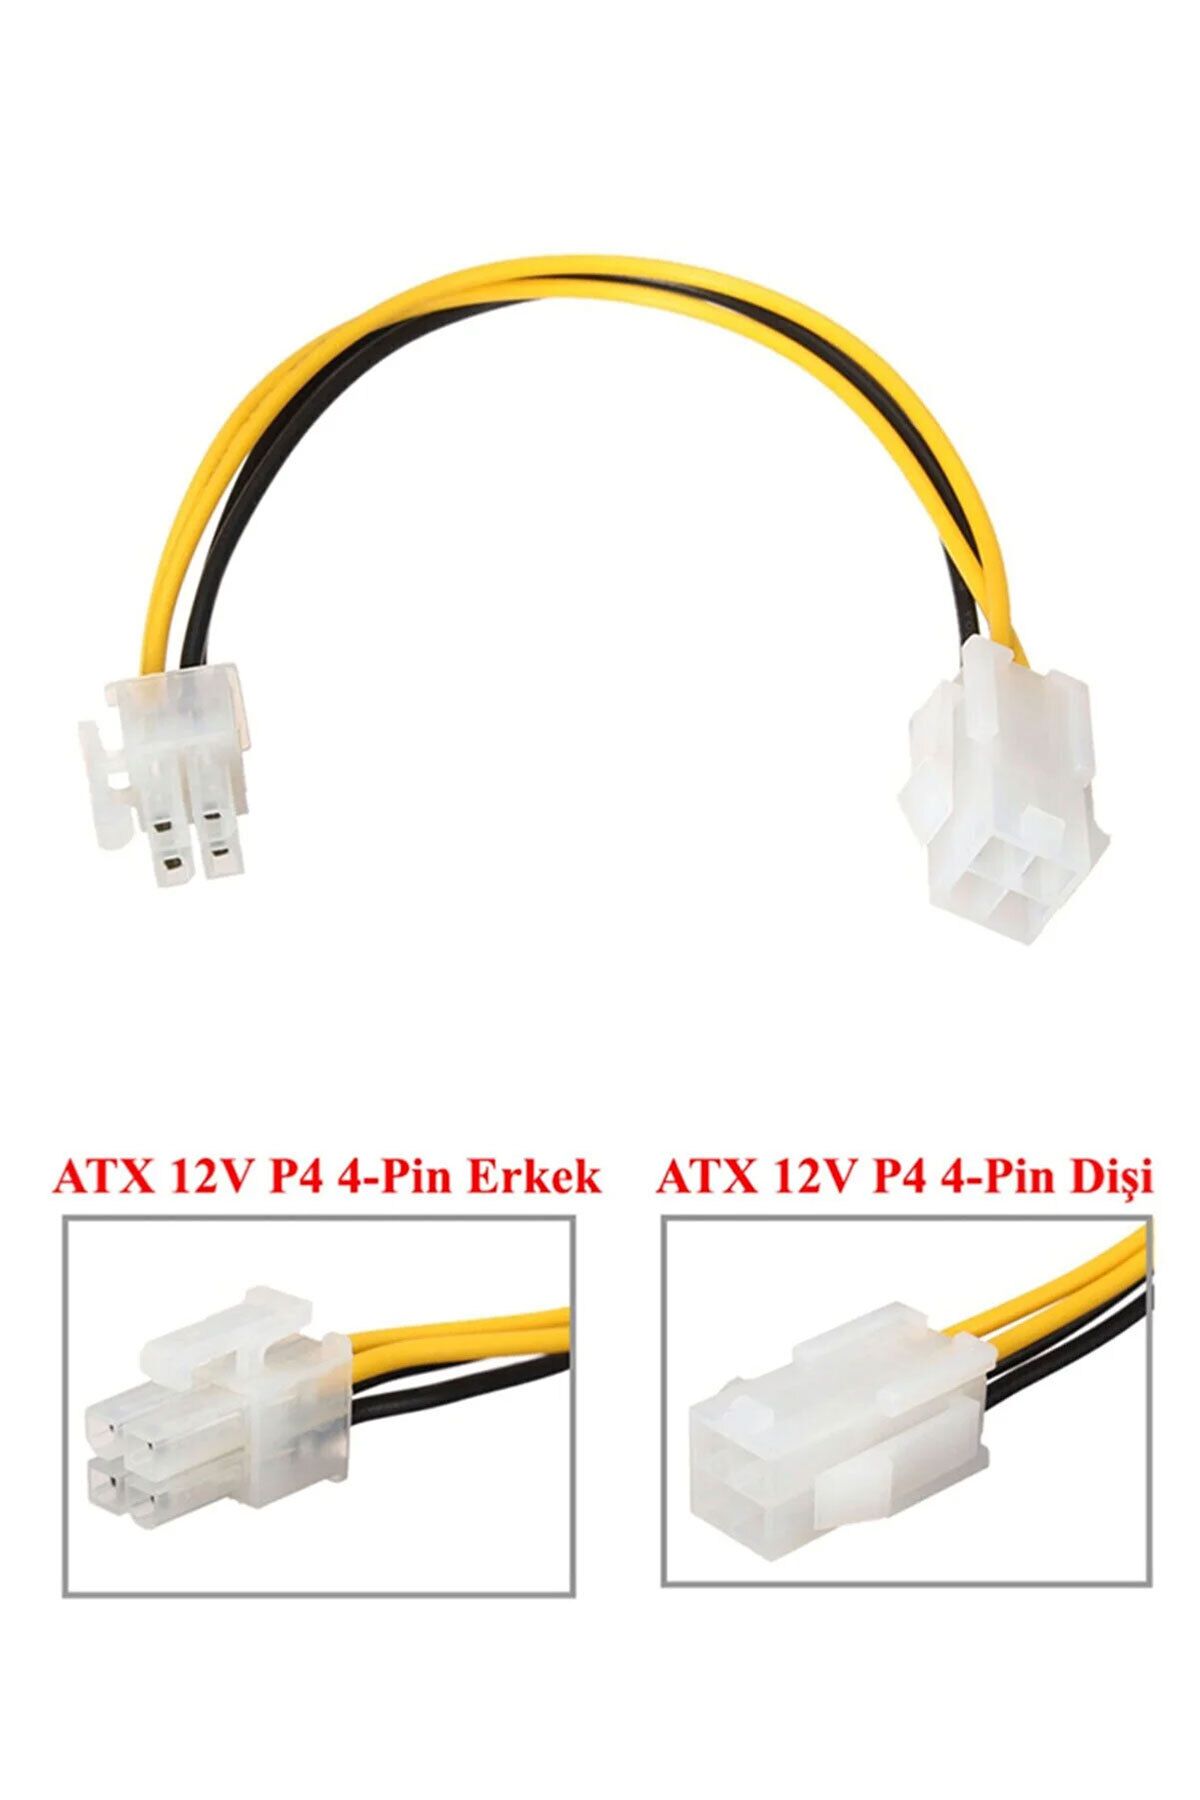 BK Teknoloji Atx Güç Kaynağı 12v 4-pin P4 Cpu Power Erkek-dişi Uzatma Kablosu